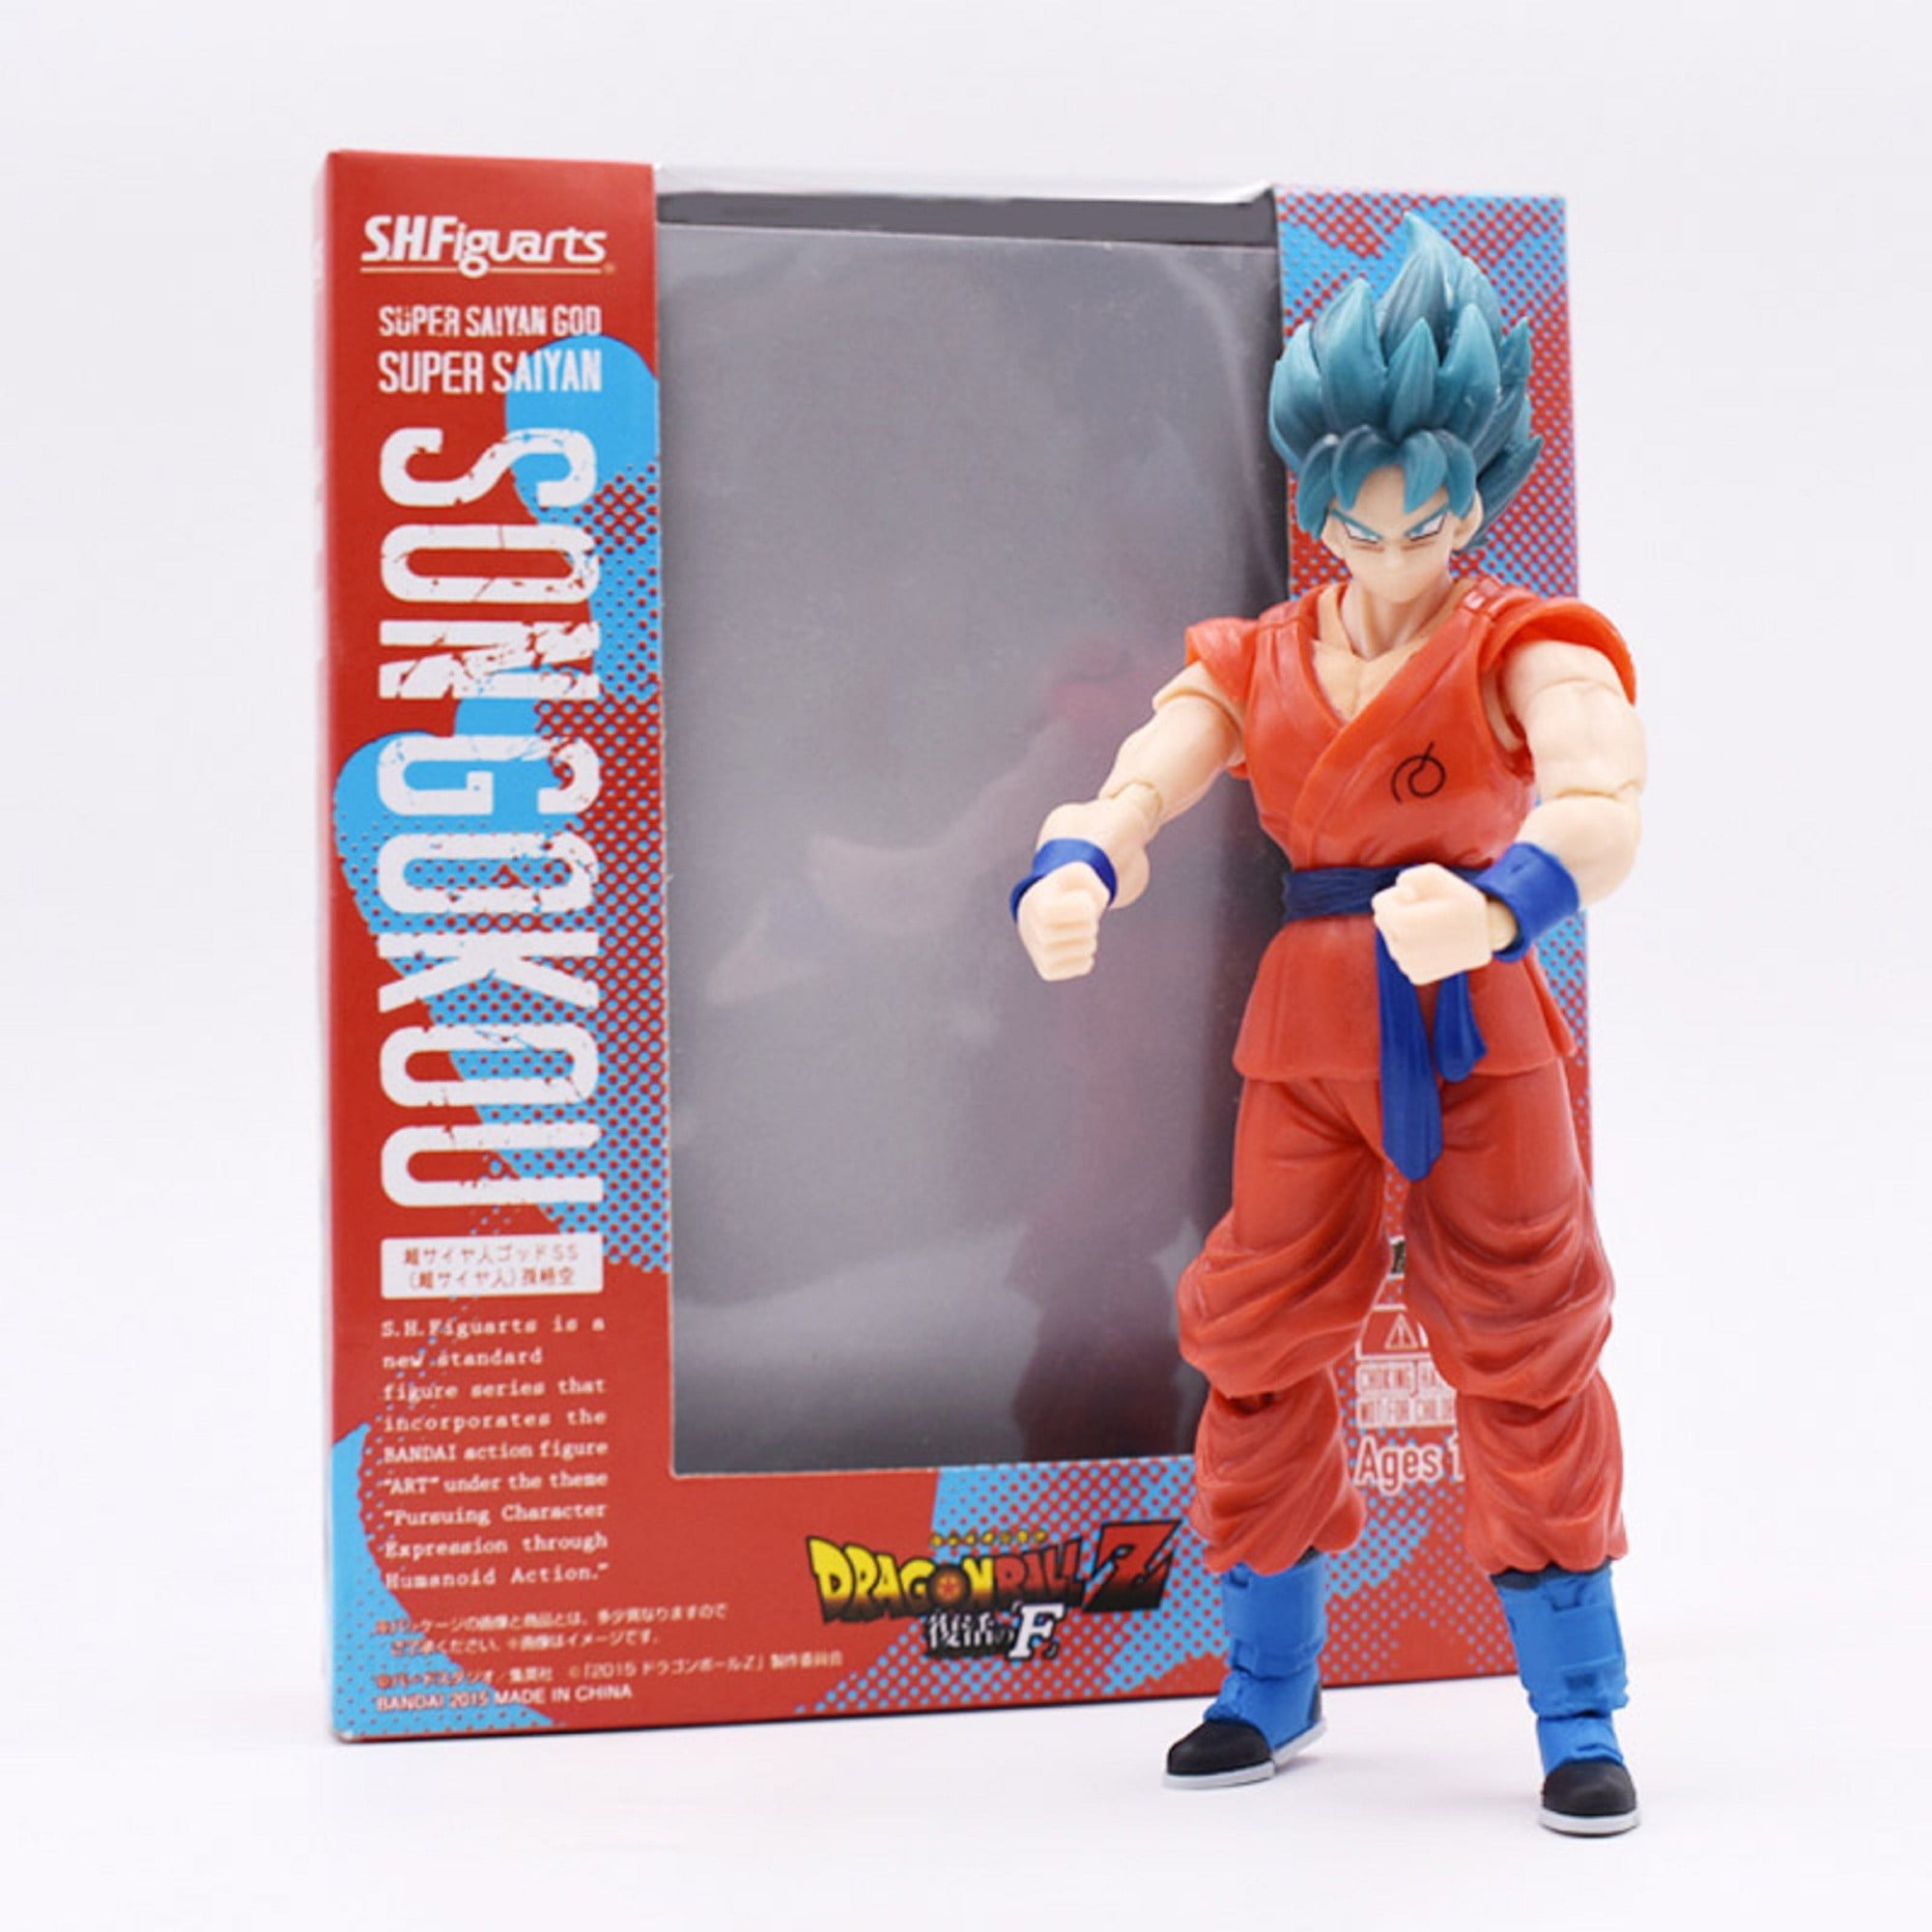 Articulado 16cm Dragon Ball SHF Goku Super Saiyan 4 ssj4 PVC